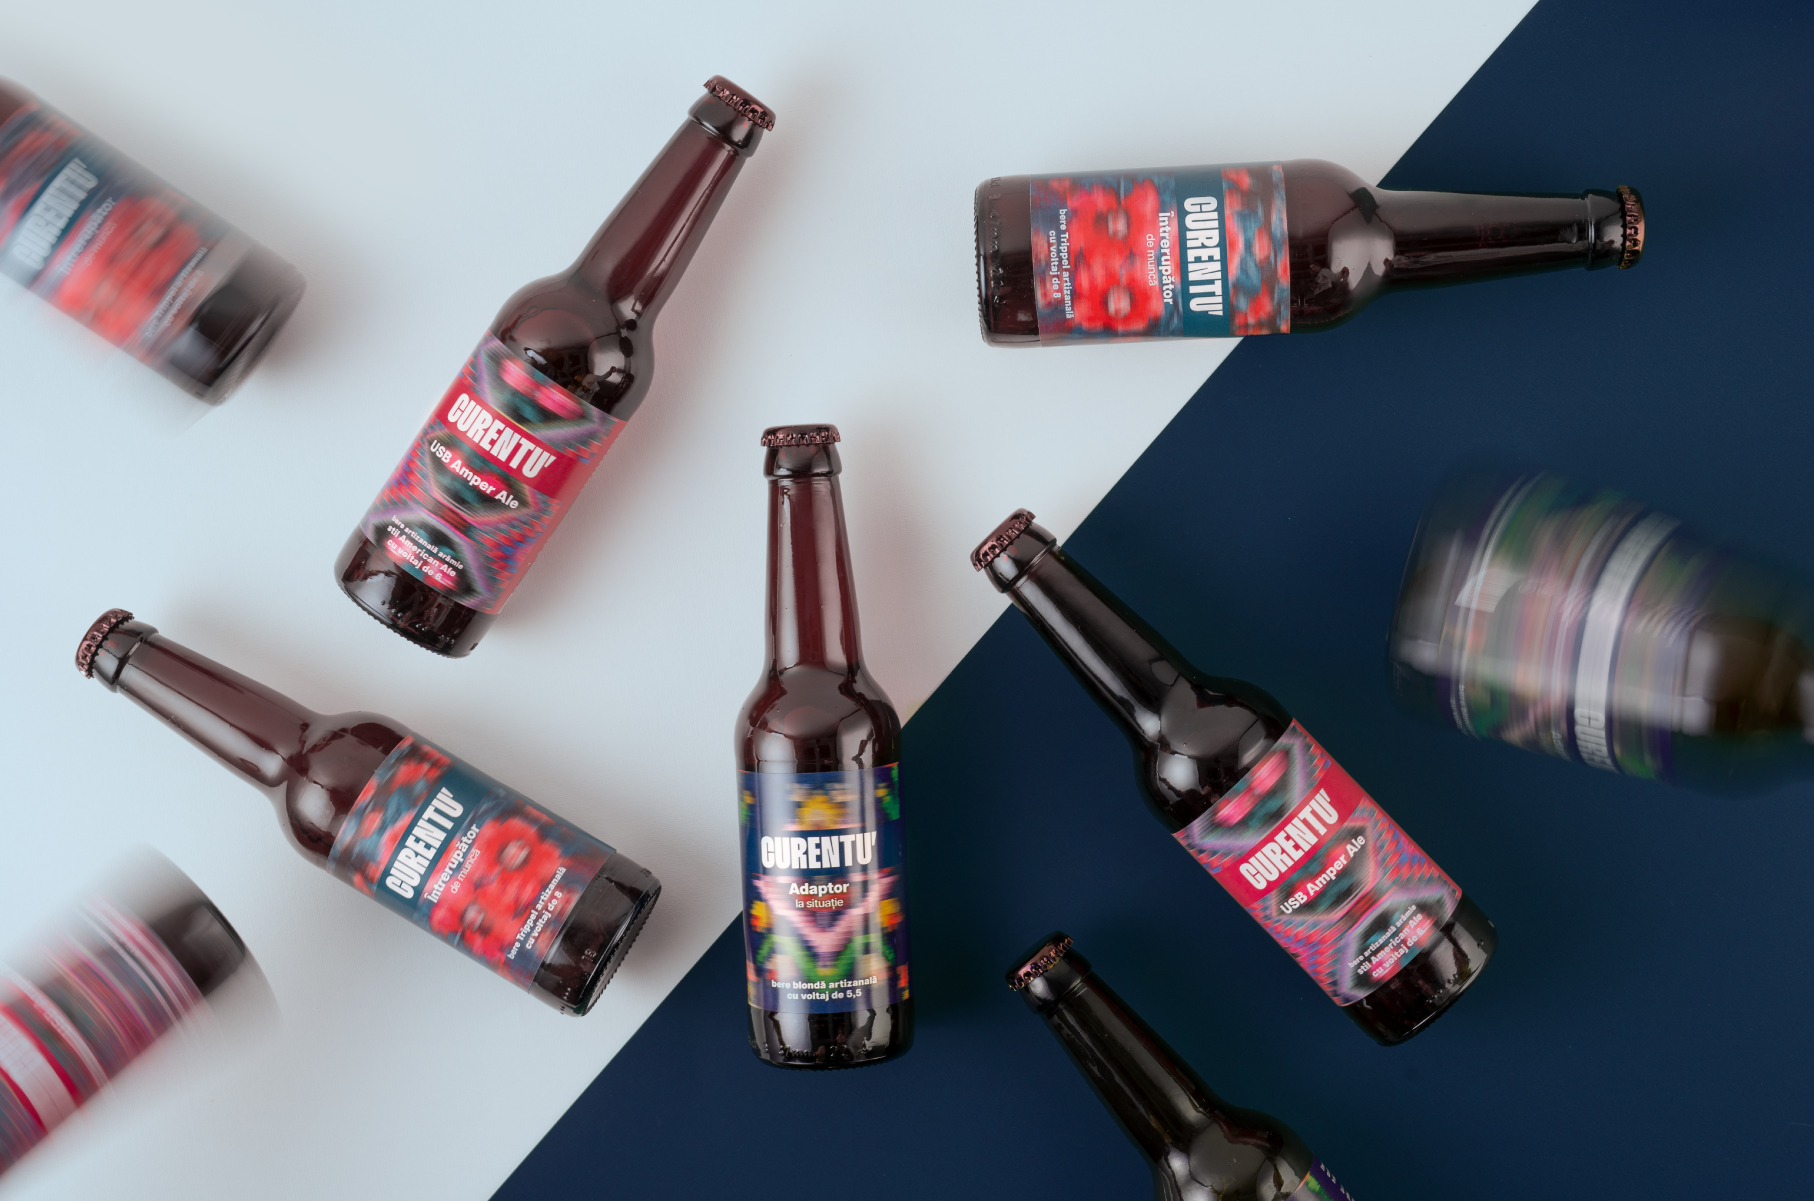 Curentu’ Beer Identity and Label Design